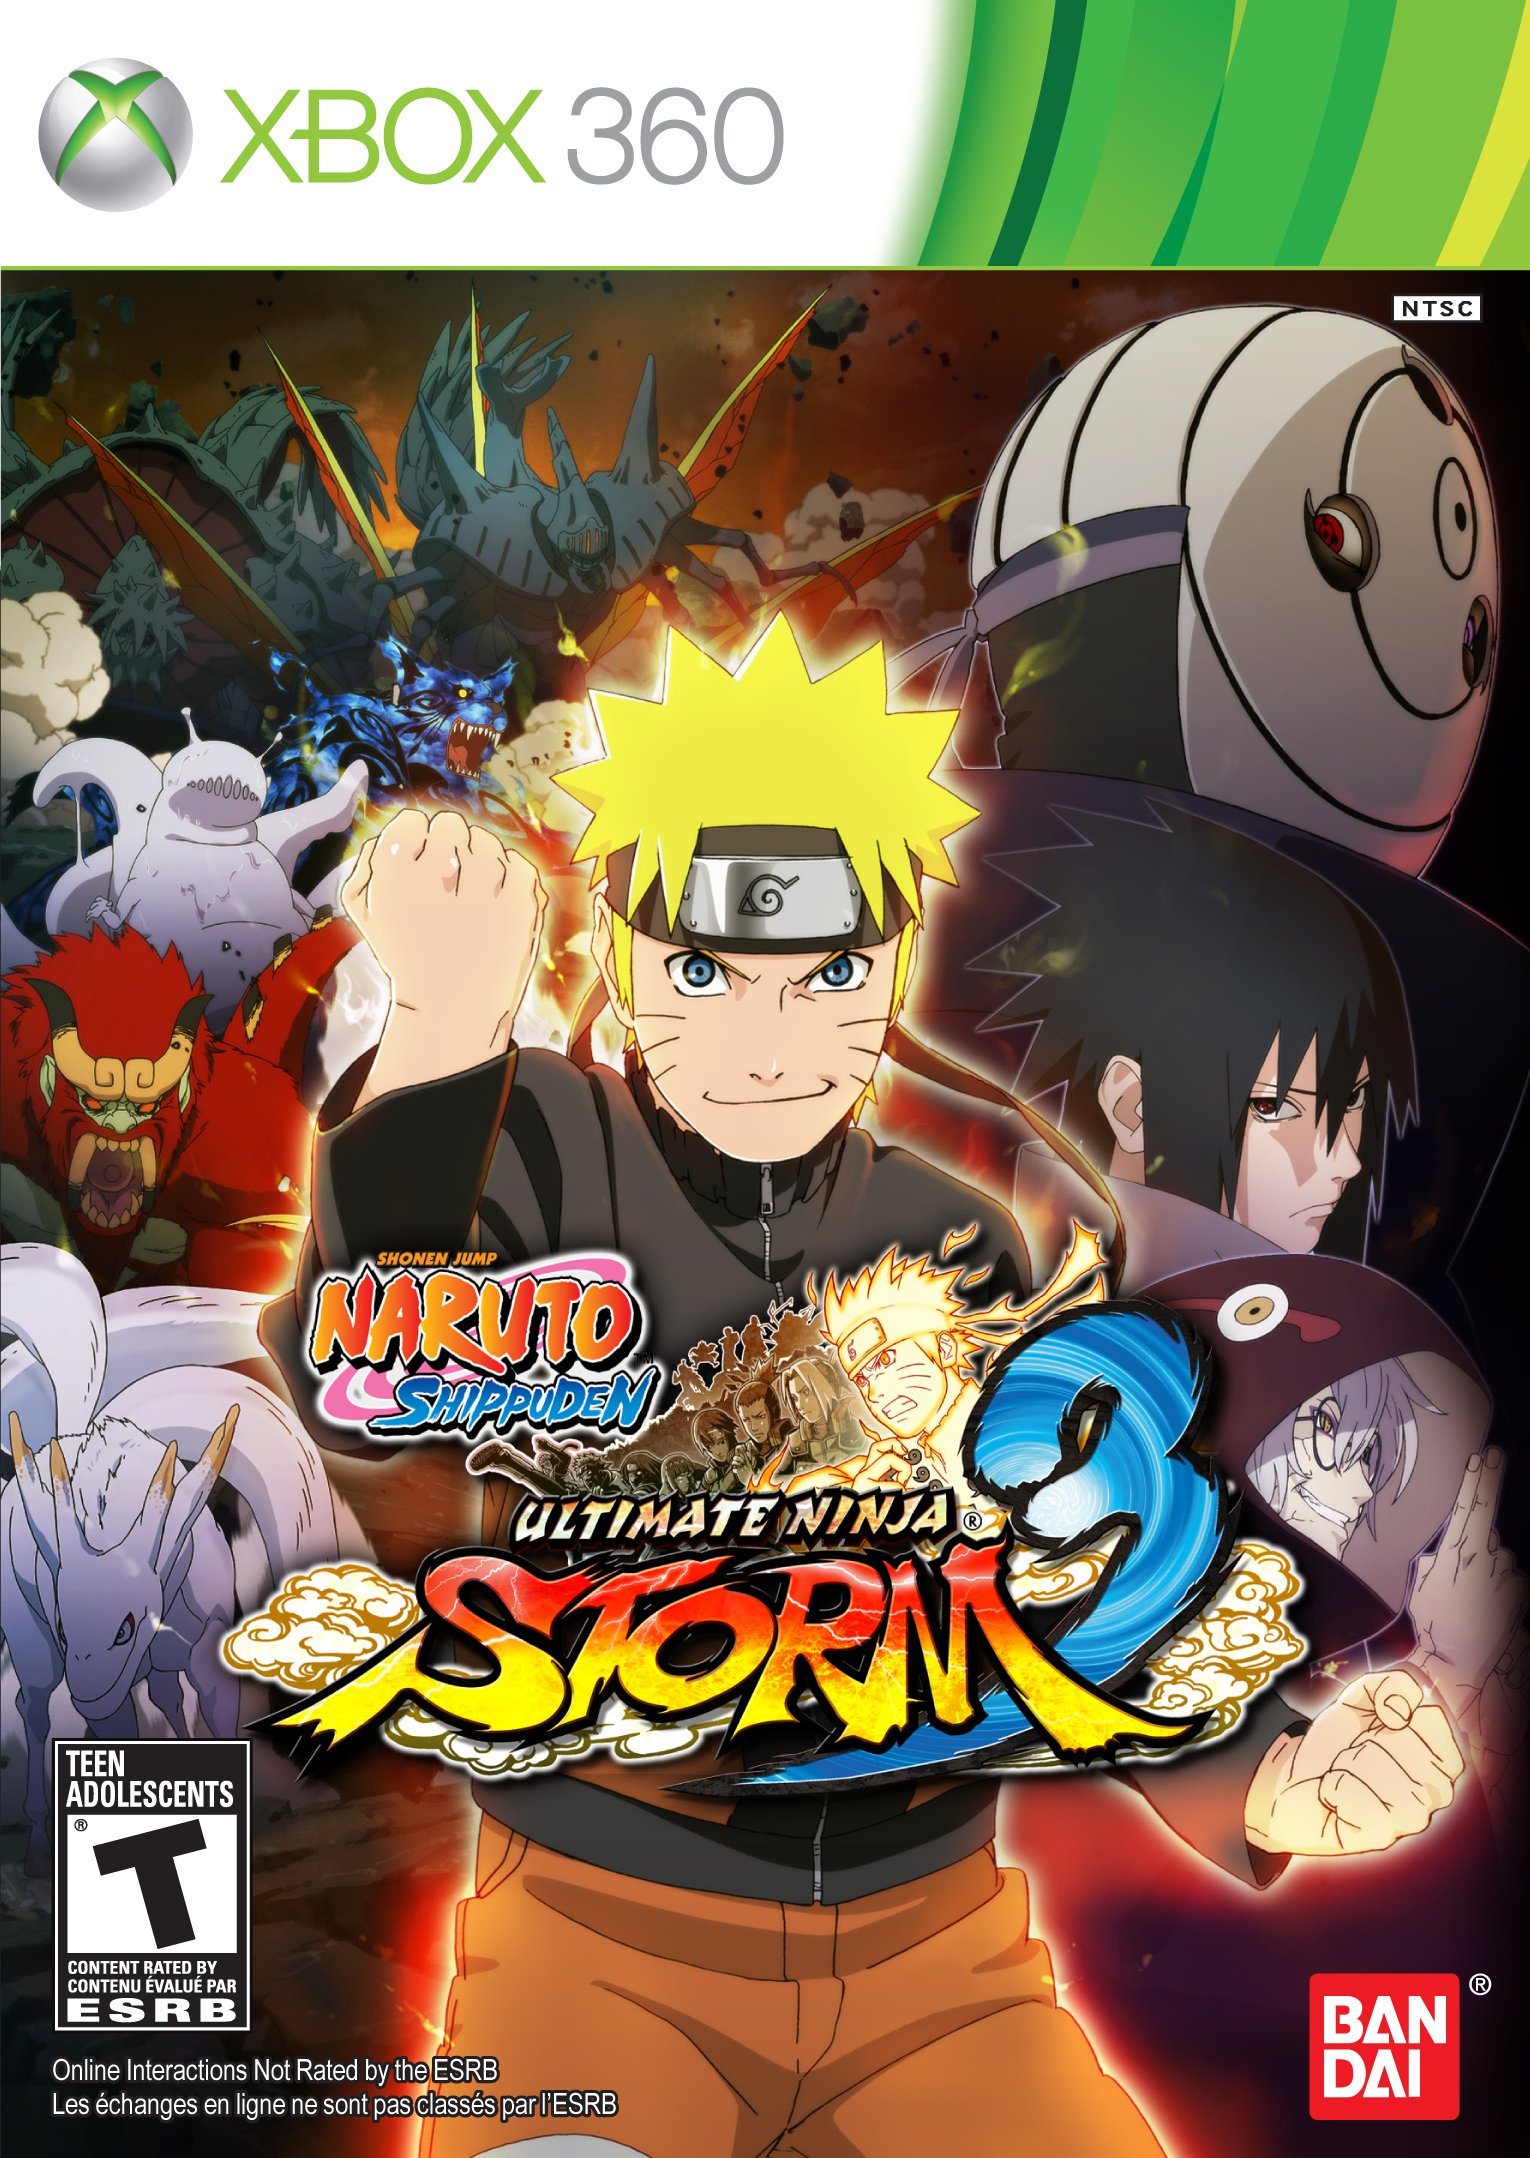 XBOX 360 - Naruto Shippuden: Ultimate Ninja Storm 3